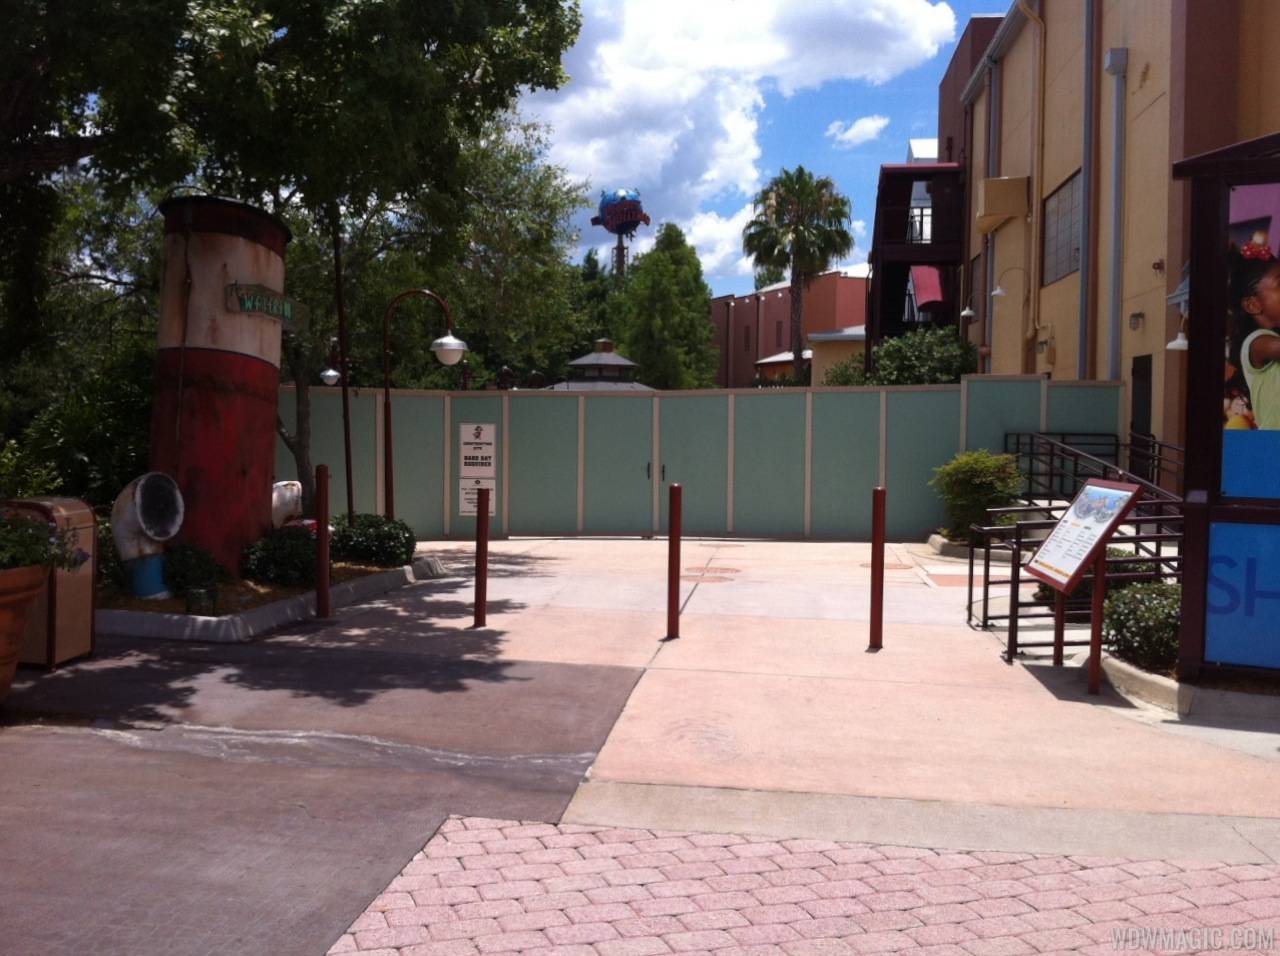 PHOTOS - More Disney Springs construction walls go up around Pleasure Island